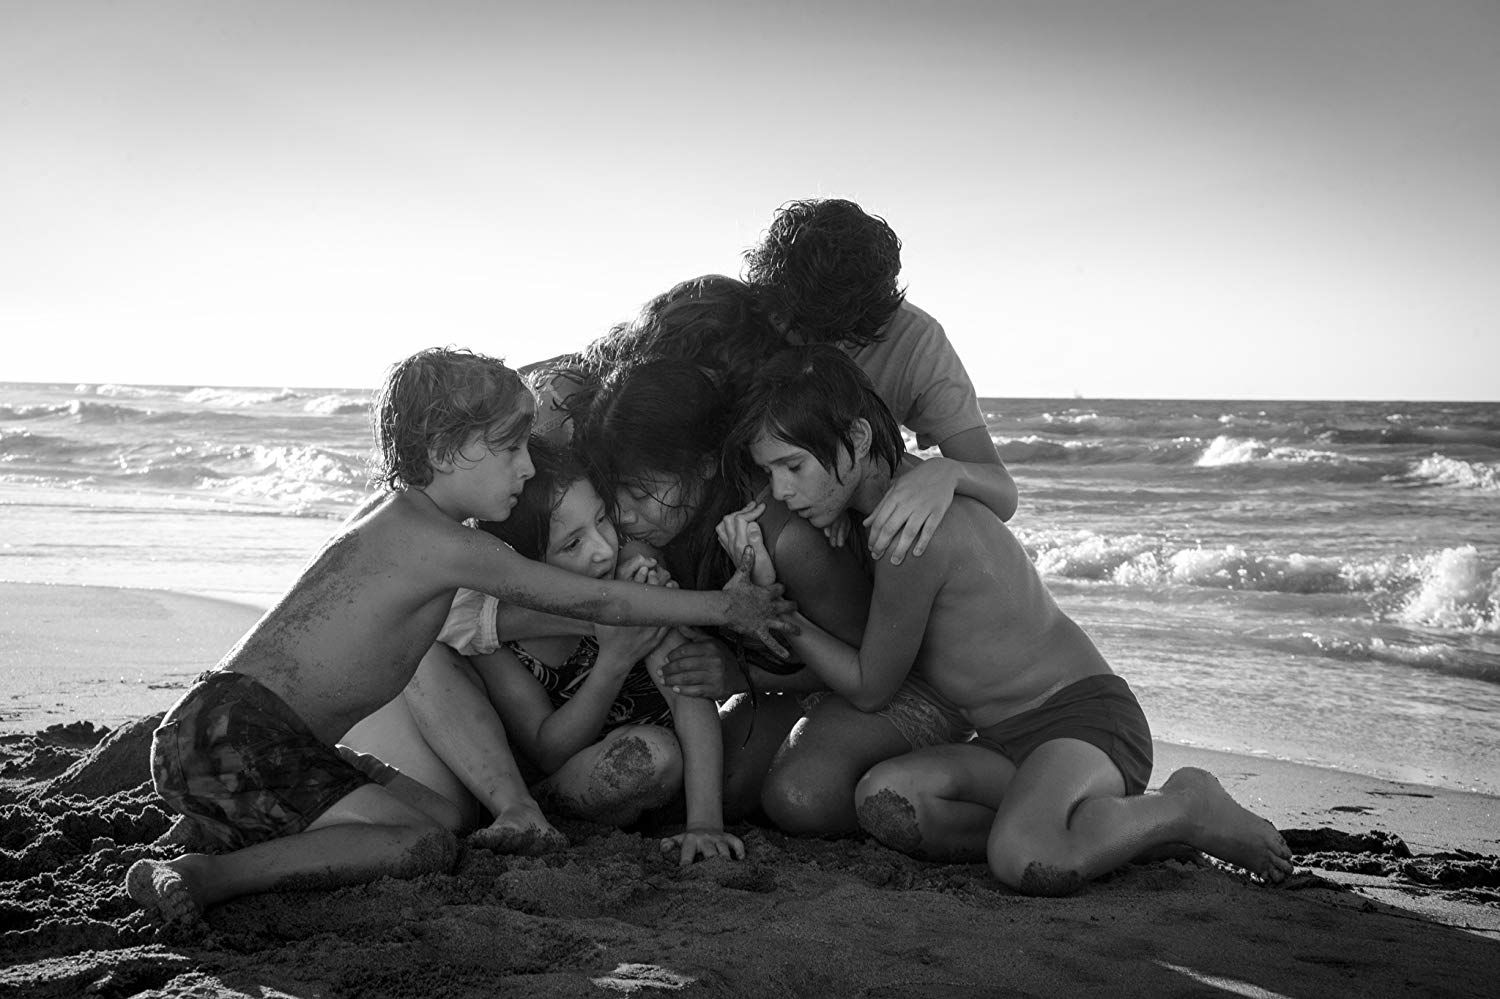 Actors Marina de Tavira, Marco Graf, Yalitza Aparicio, Daniela Demesa, Diego Cortina Autrey, and Carlos Peralta embrace on the beach in a scene from the film "Roma"